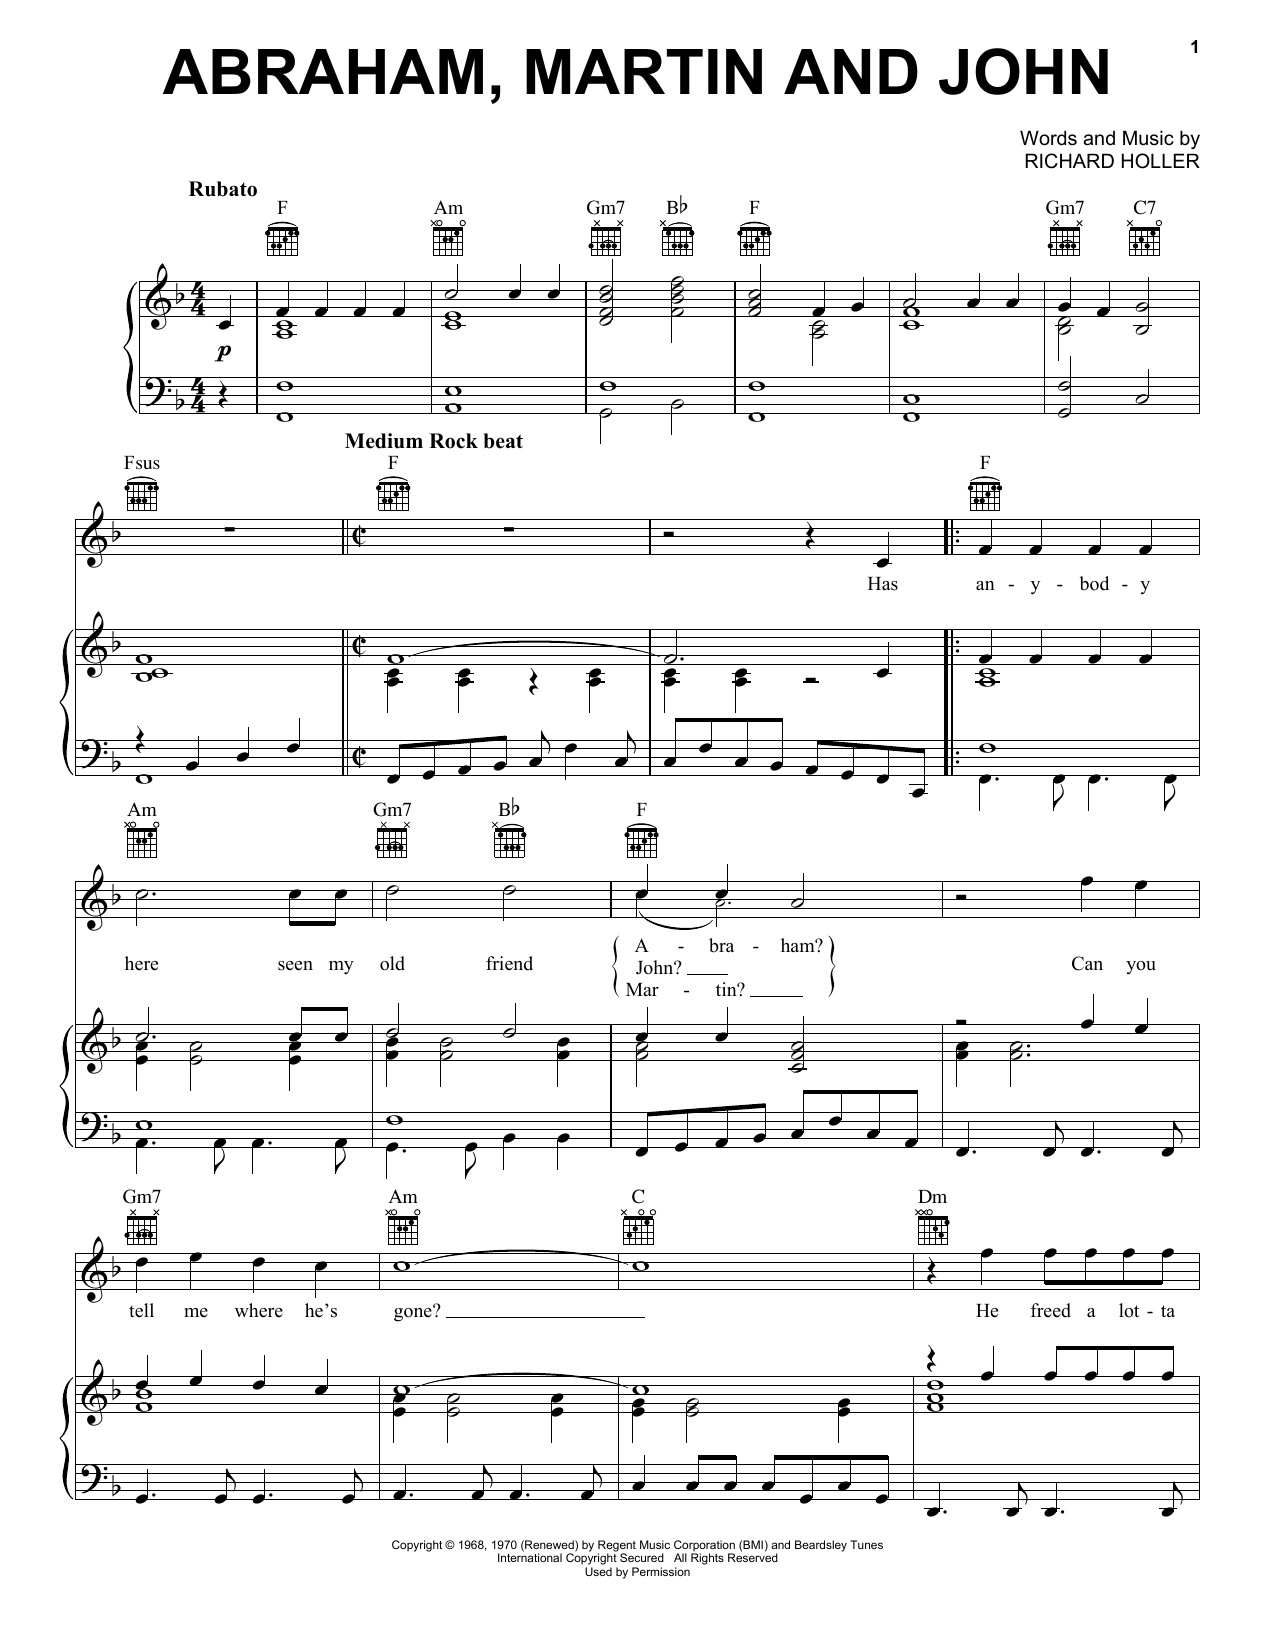 Dion Abraham, Martin And John sheet music notes and chords. Download Printable PDF.